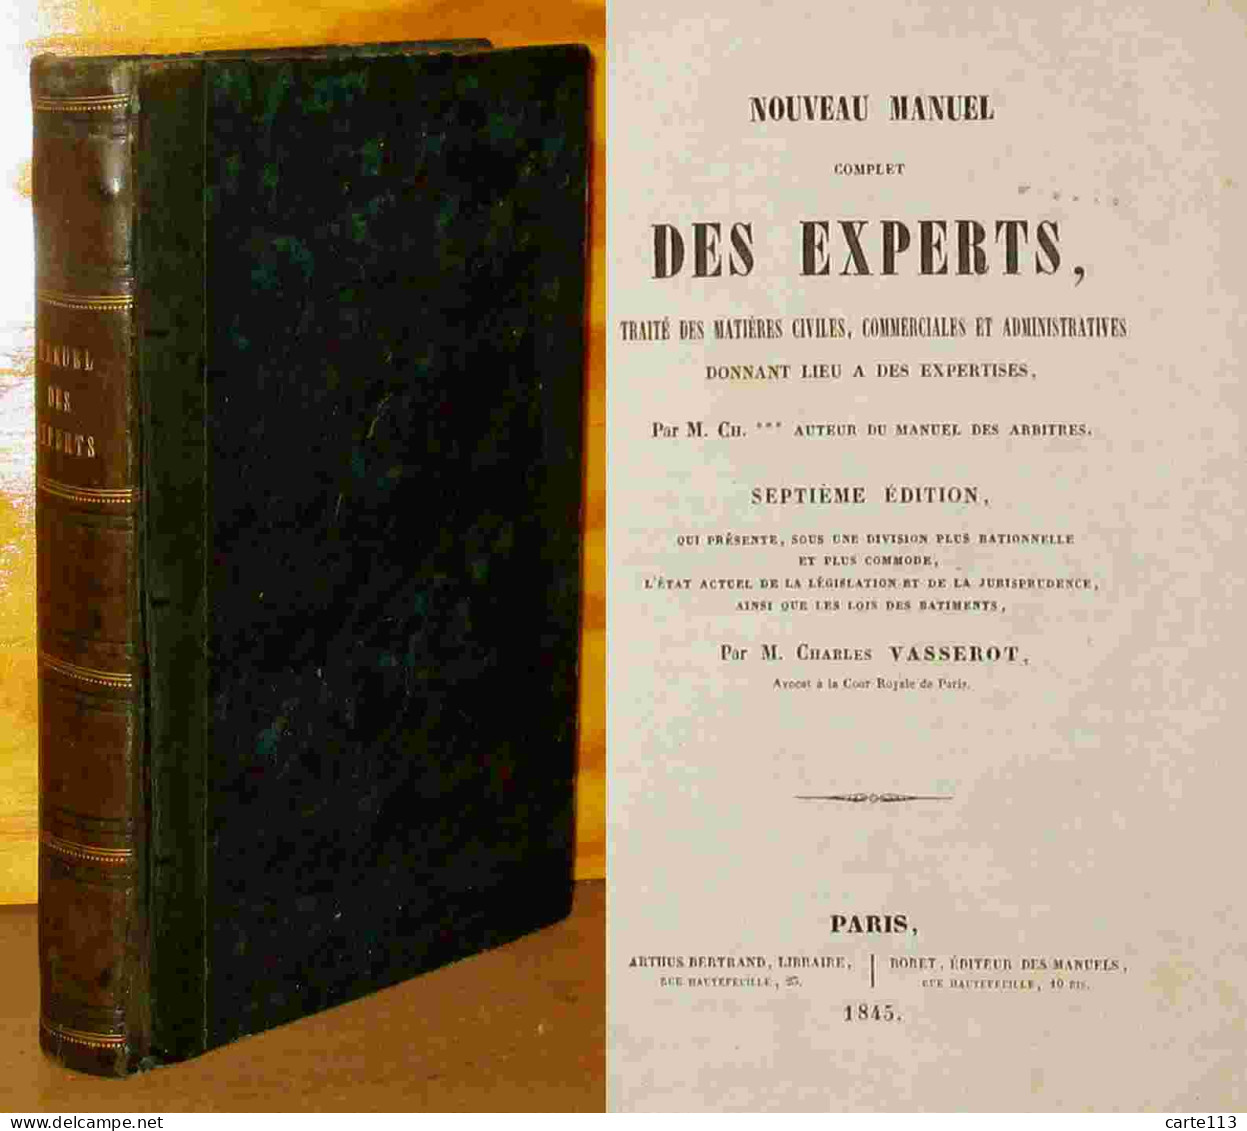 VASSEROT Charles - NOUVEAU MANUEL COMPLET DES EXPERTS - 1801-1900